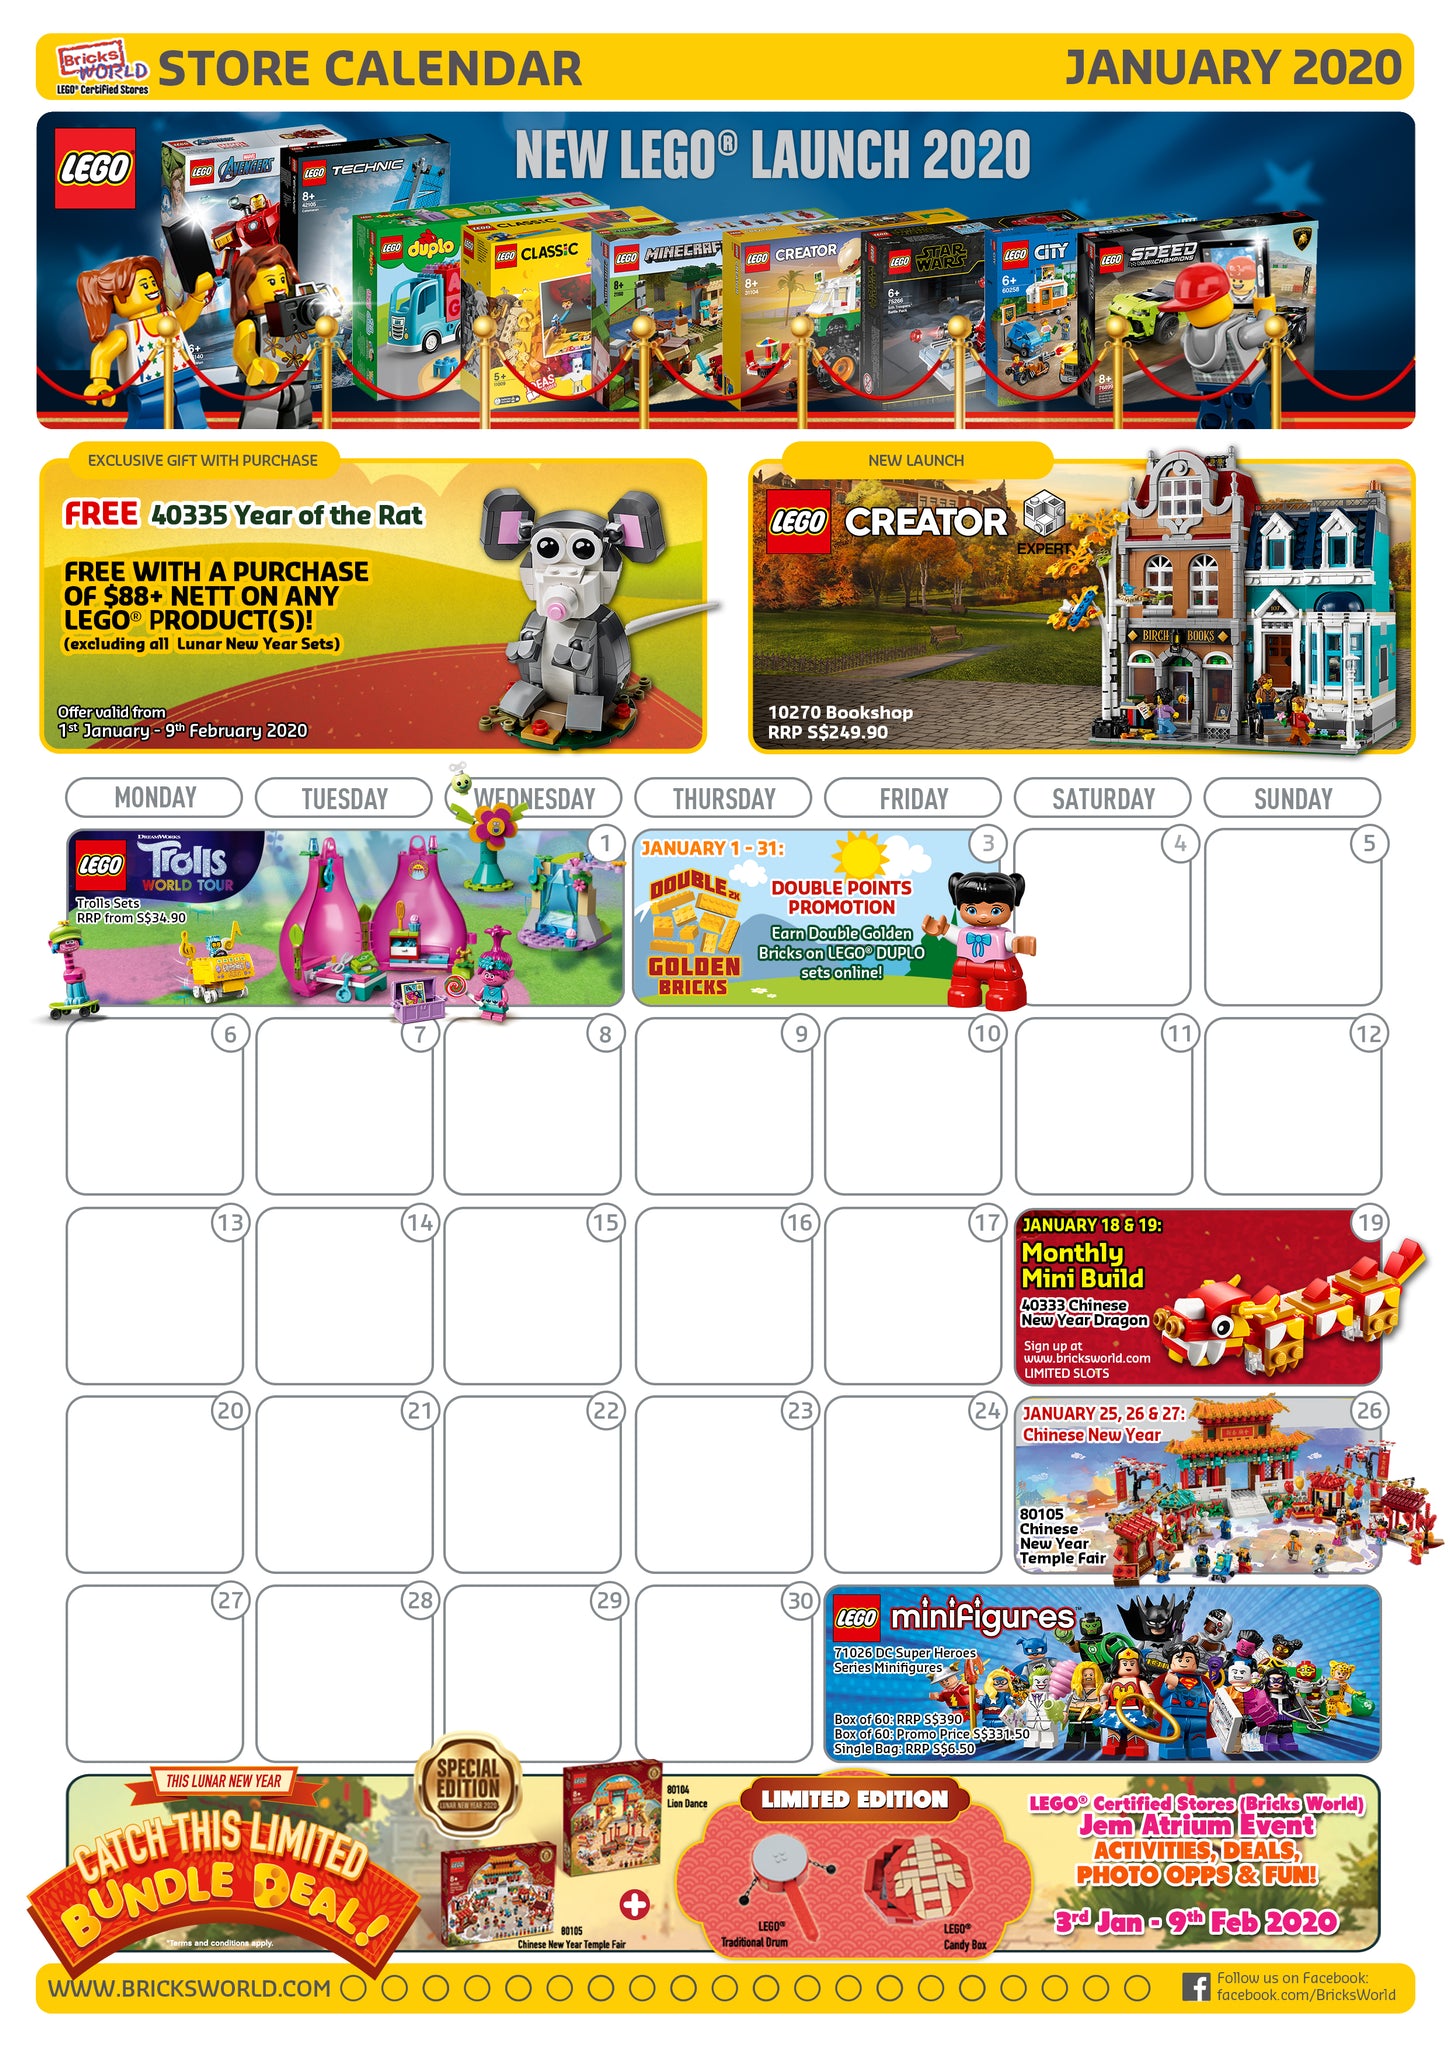 LEGO Certified Stores (Bricks World) January 2020 Store Calendar